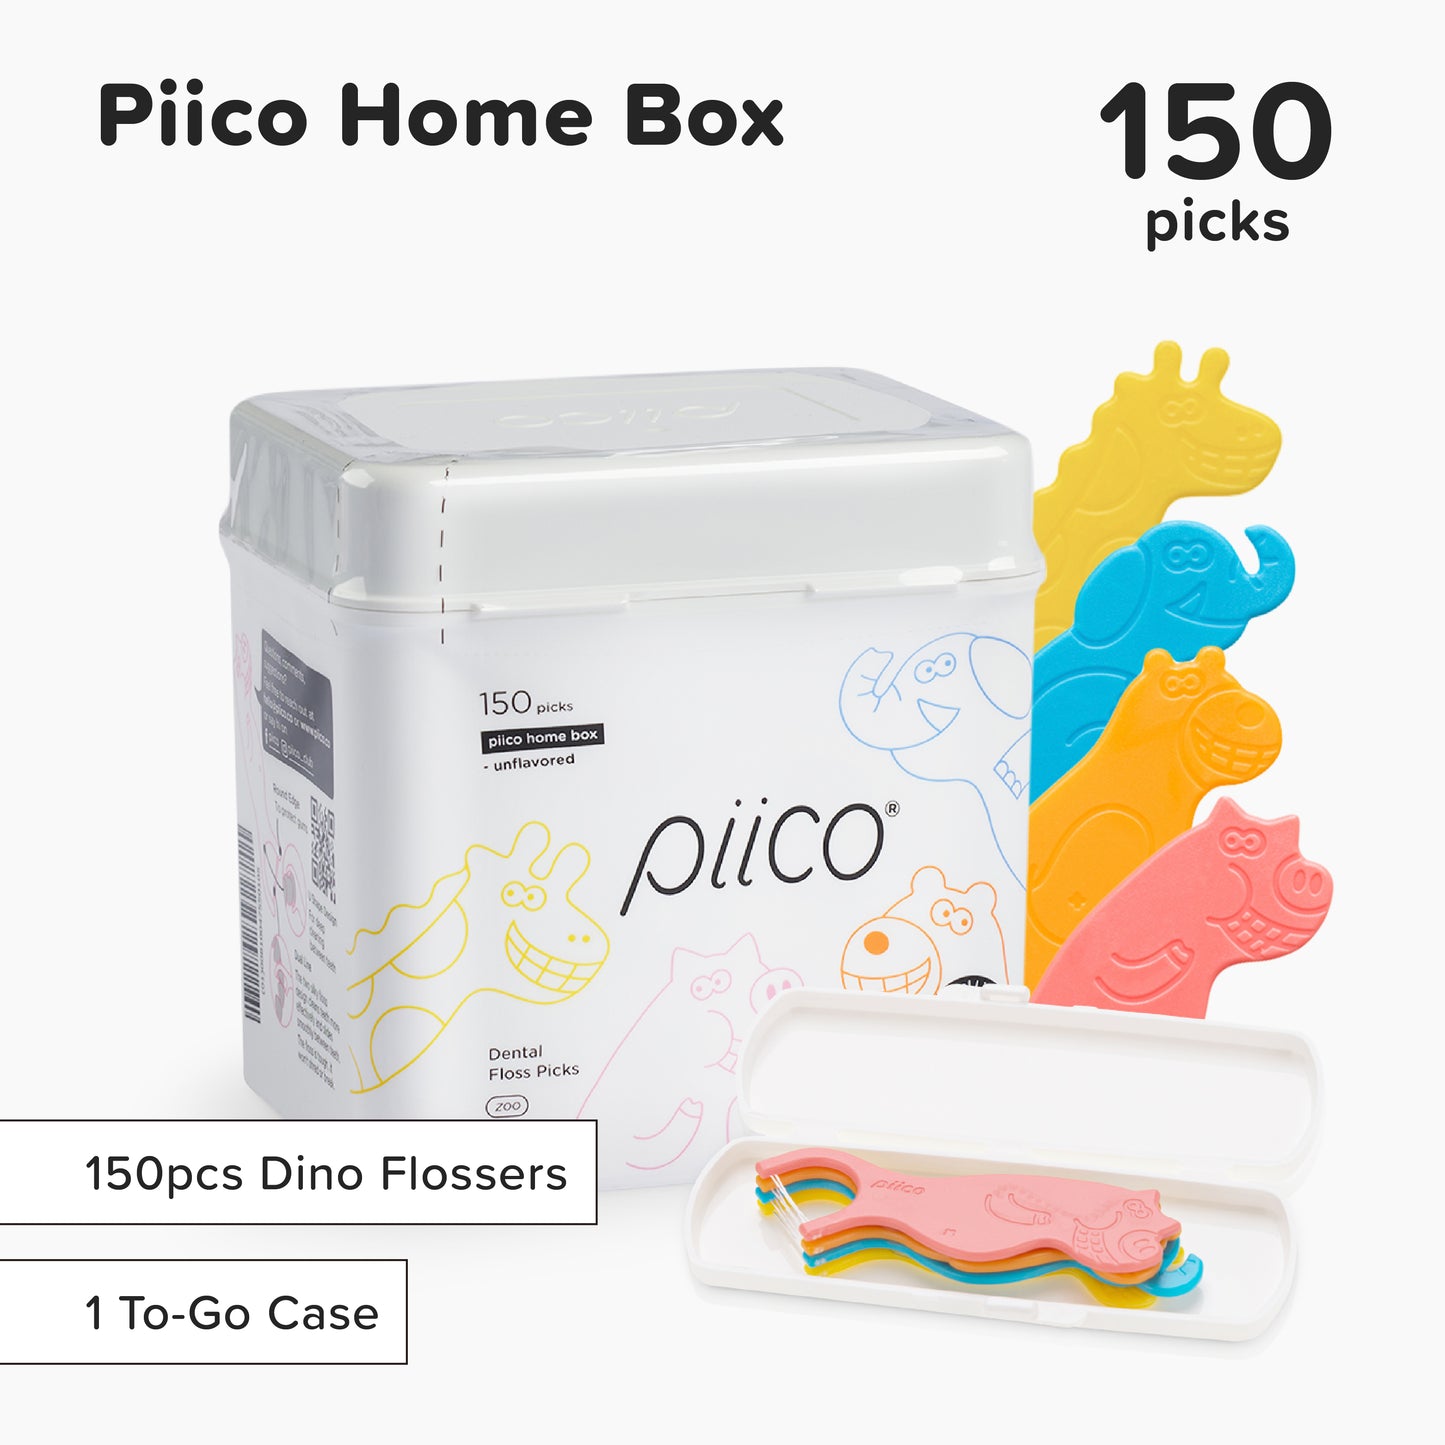 Piico Dental Floss Picks for Kids - (150 Count Homebox Zoo)